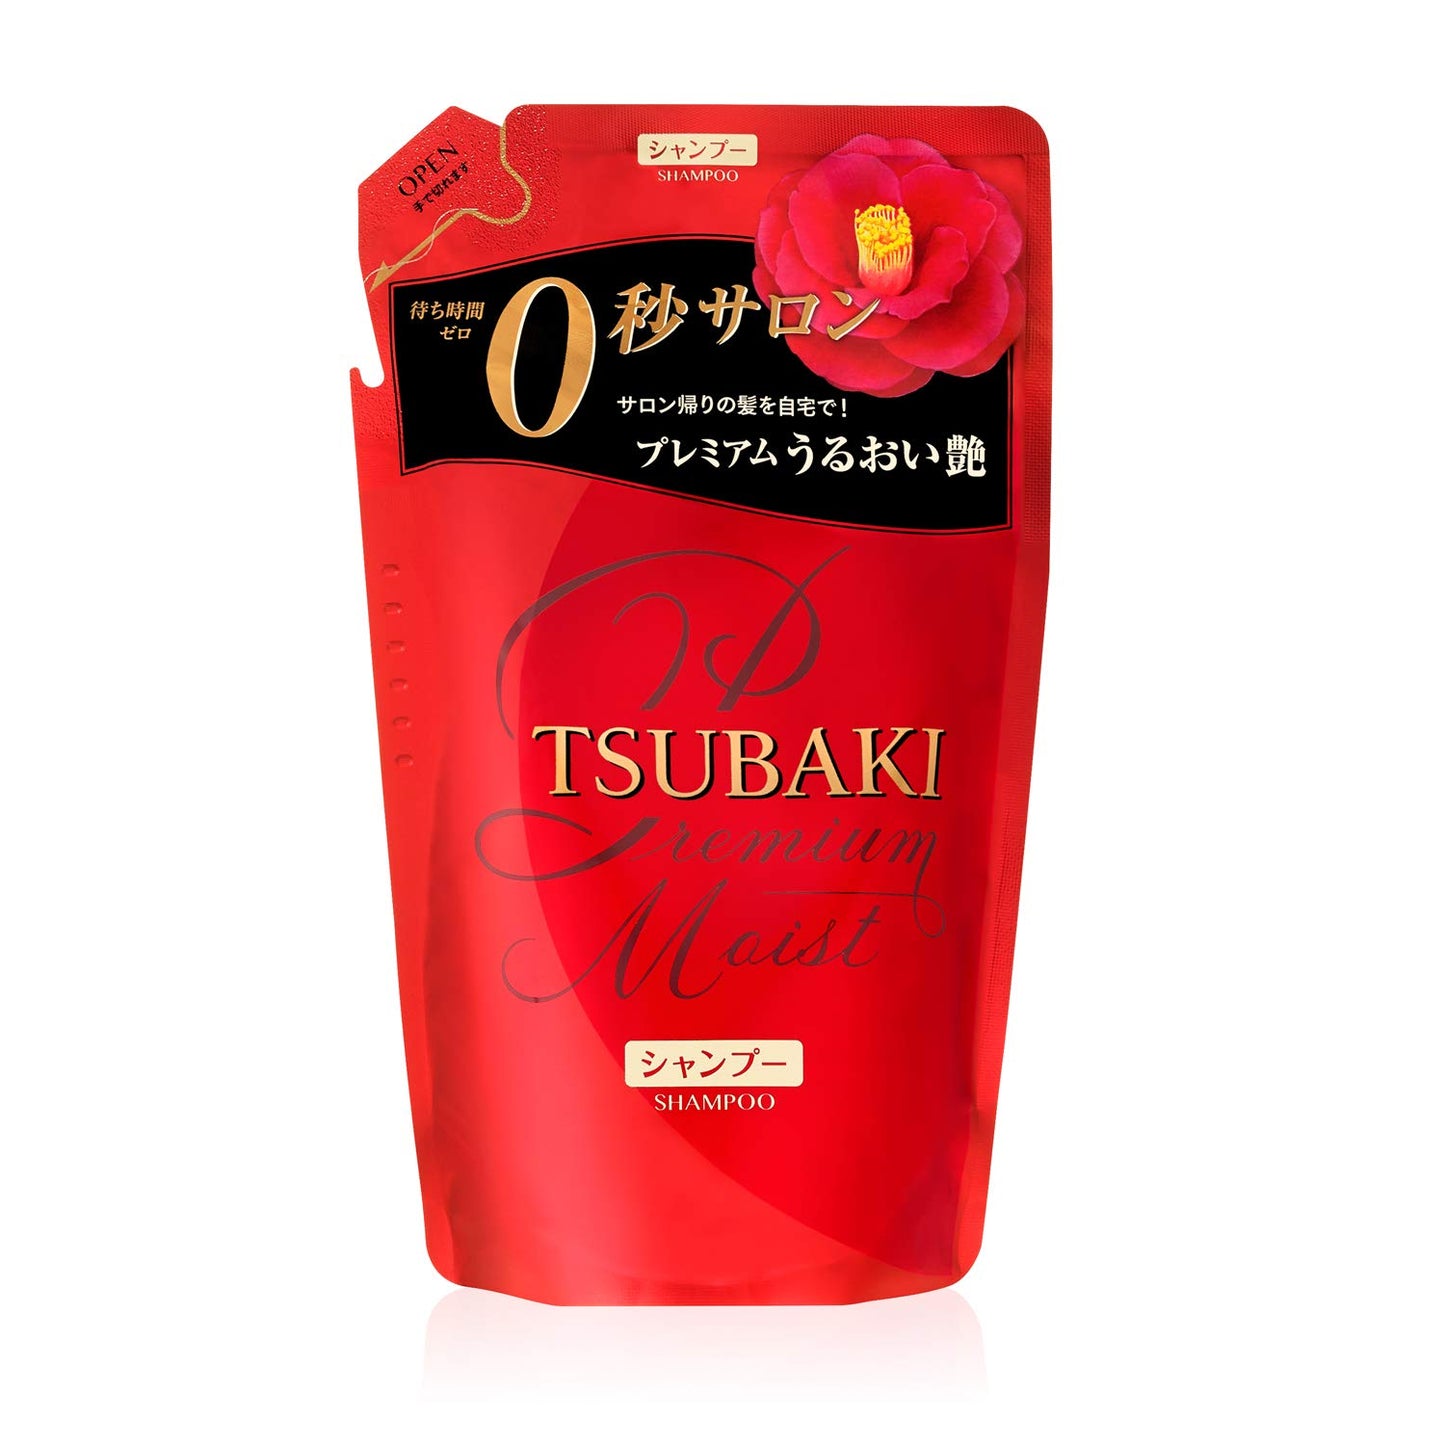 Shiseido TSUBAKI Premium Moist / Premium Repair Shampoo OR Conditioner Refill 330ml/660ml